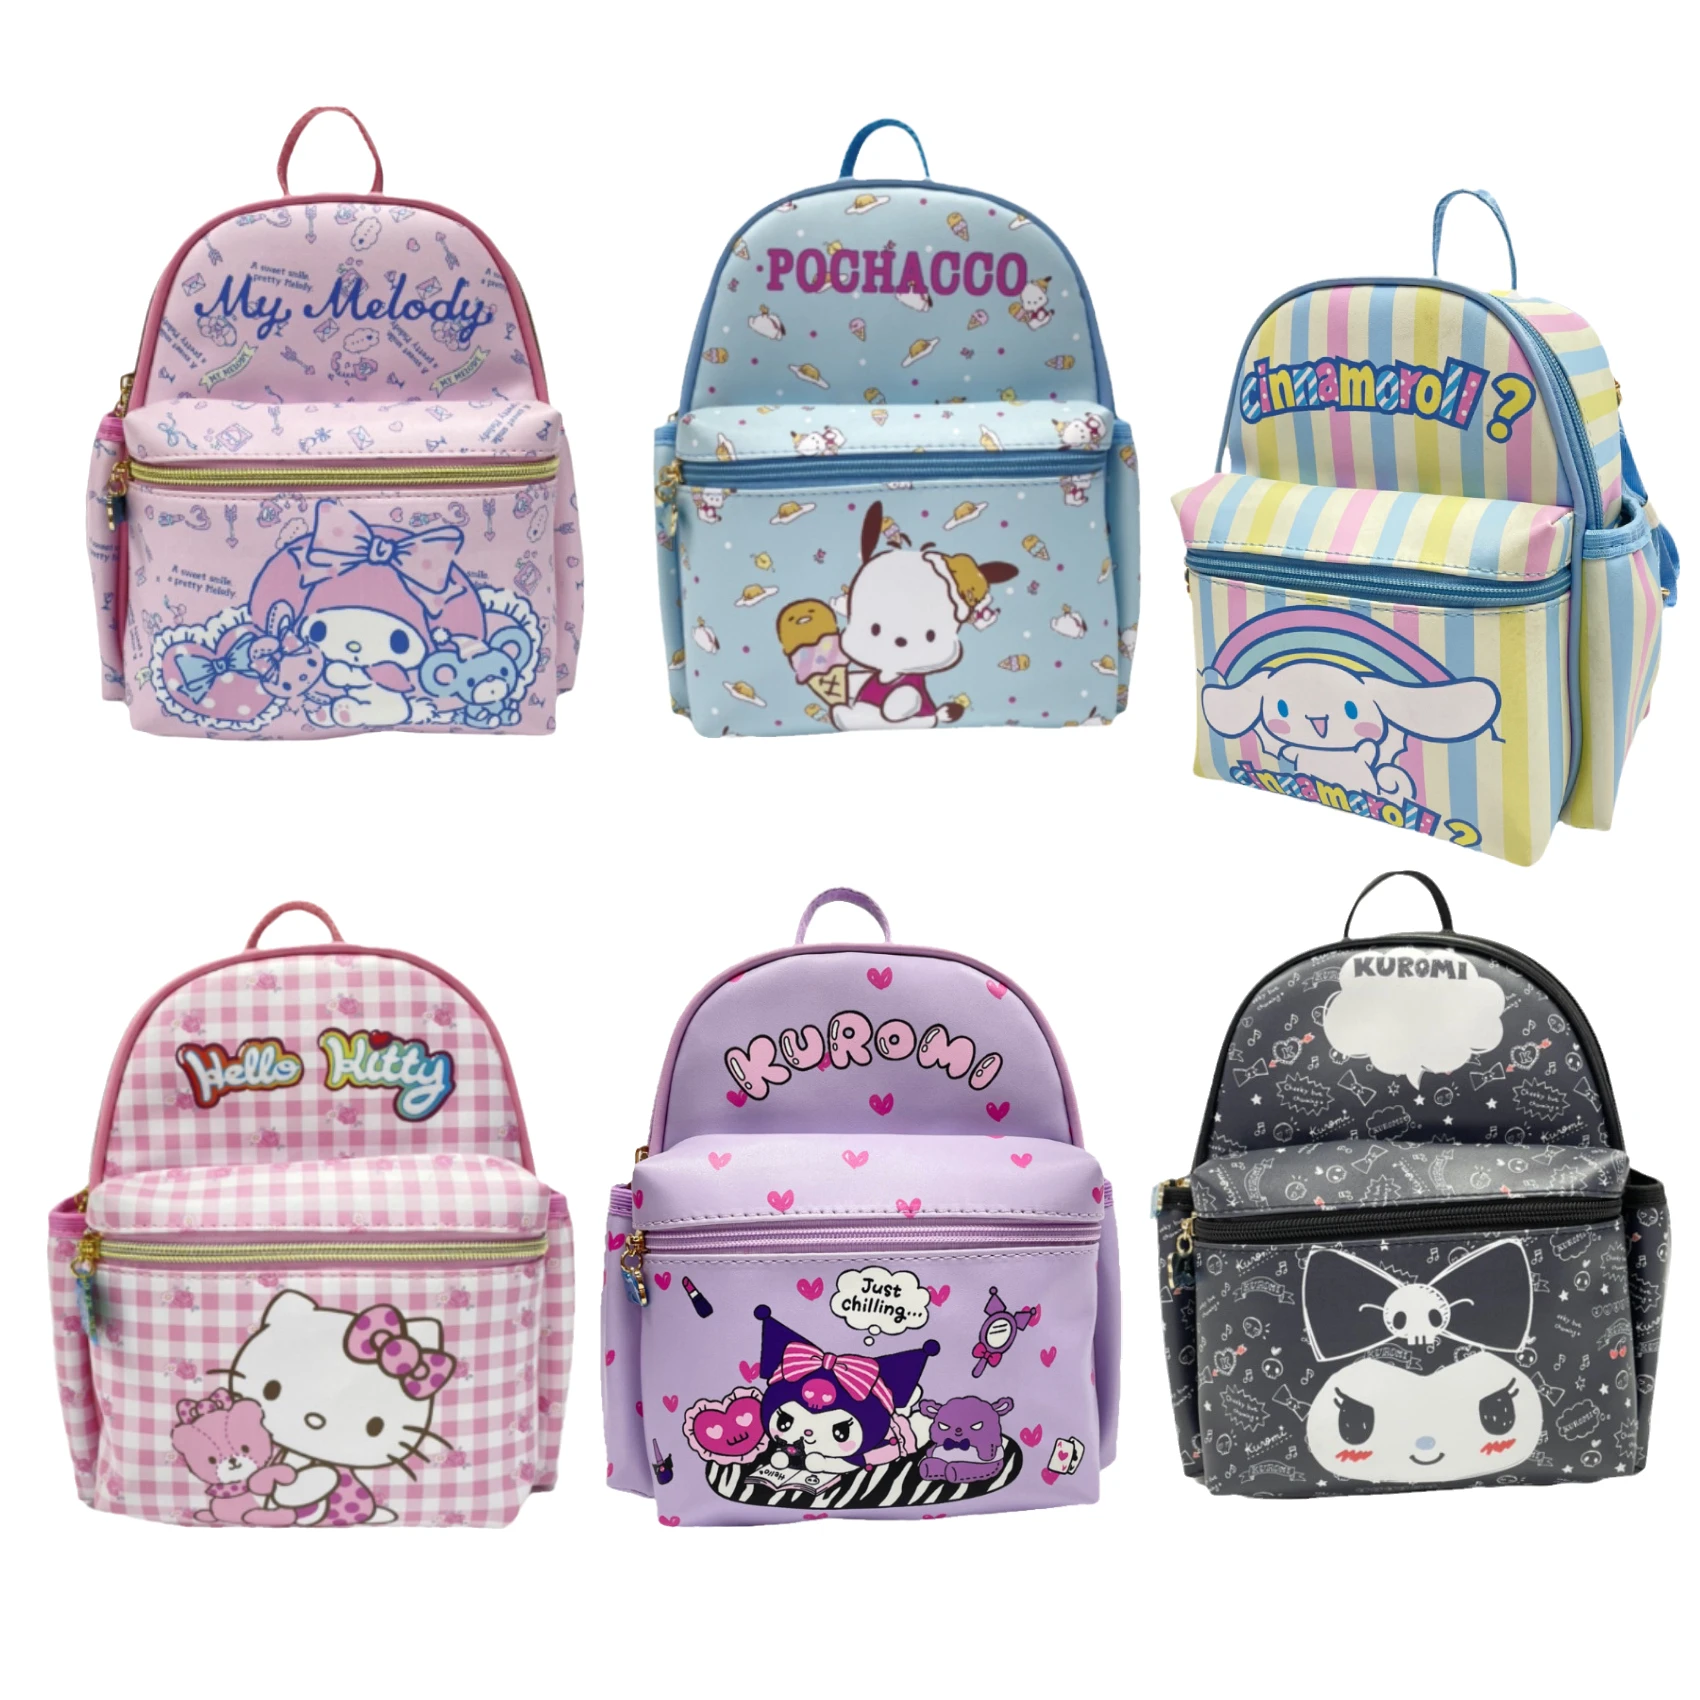 

Sanrios Kuromi Mymelody Cinnamoroll kawaii Cartoon PU Backpack Anime Plush School Bags Teenage Girl Travel Rucksack Gifts